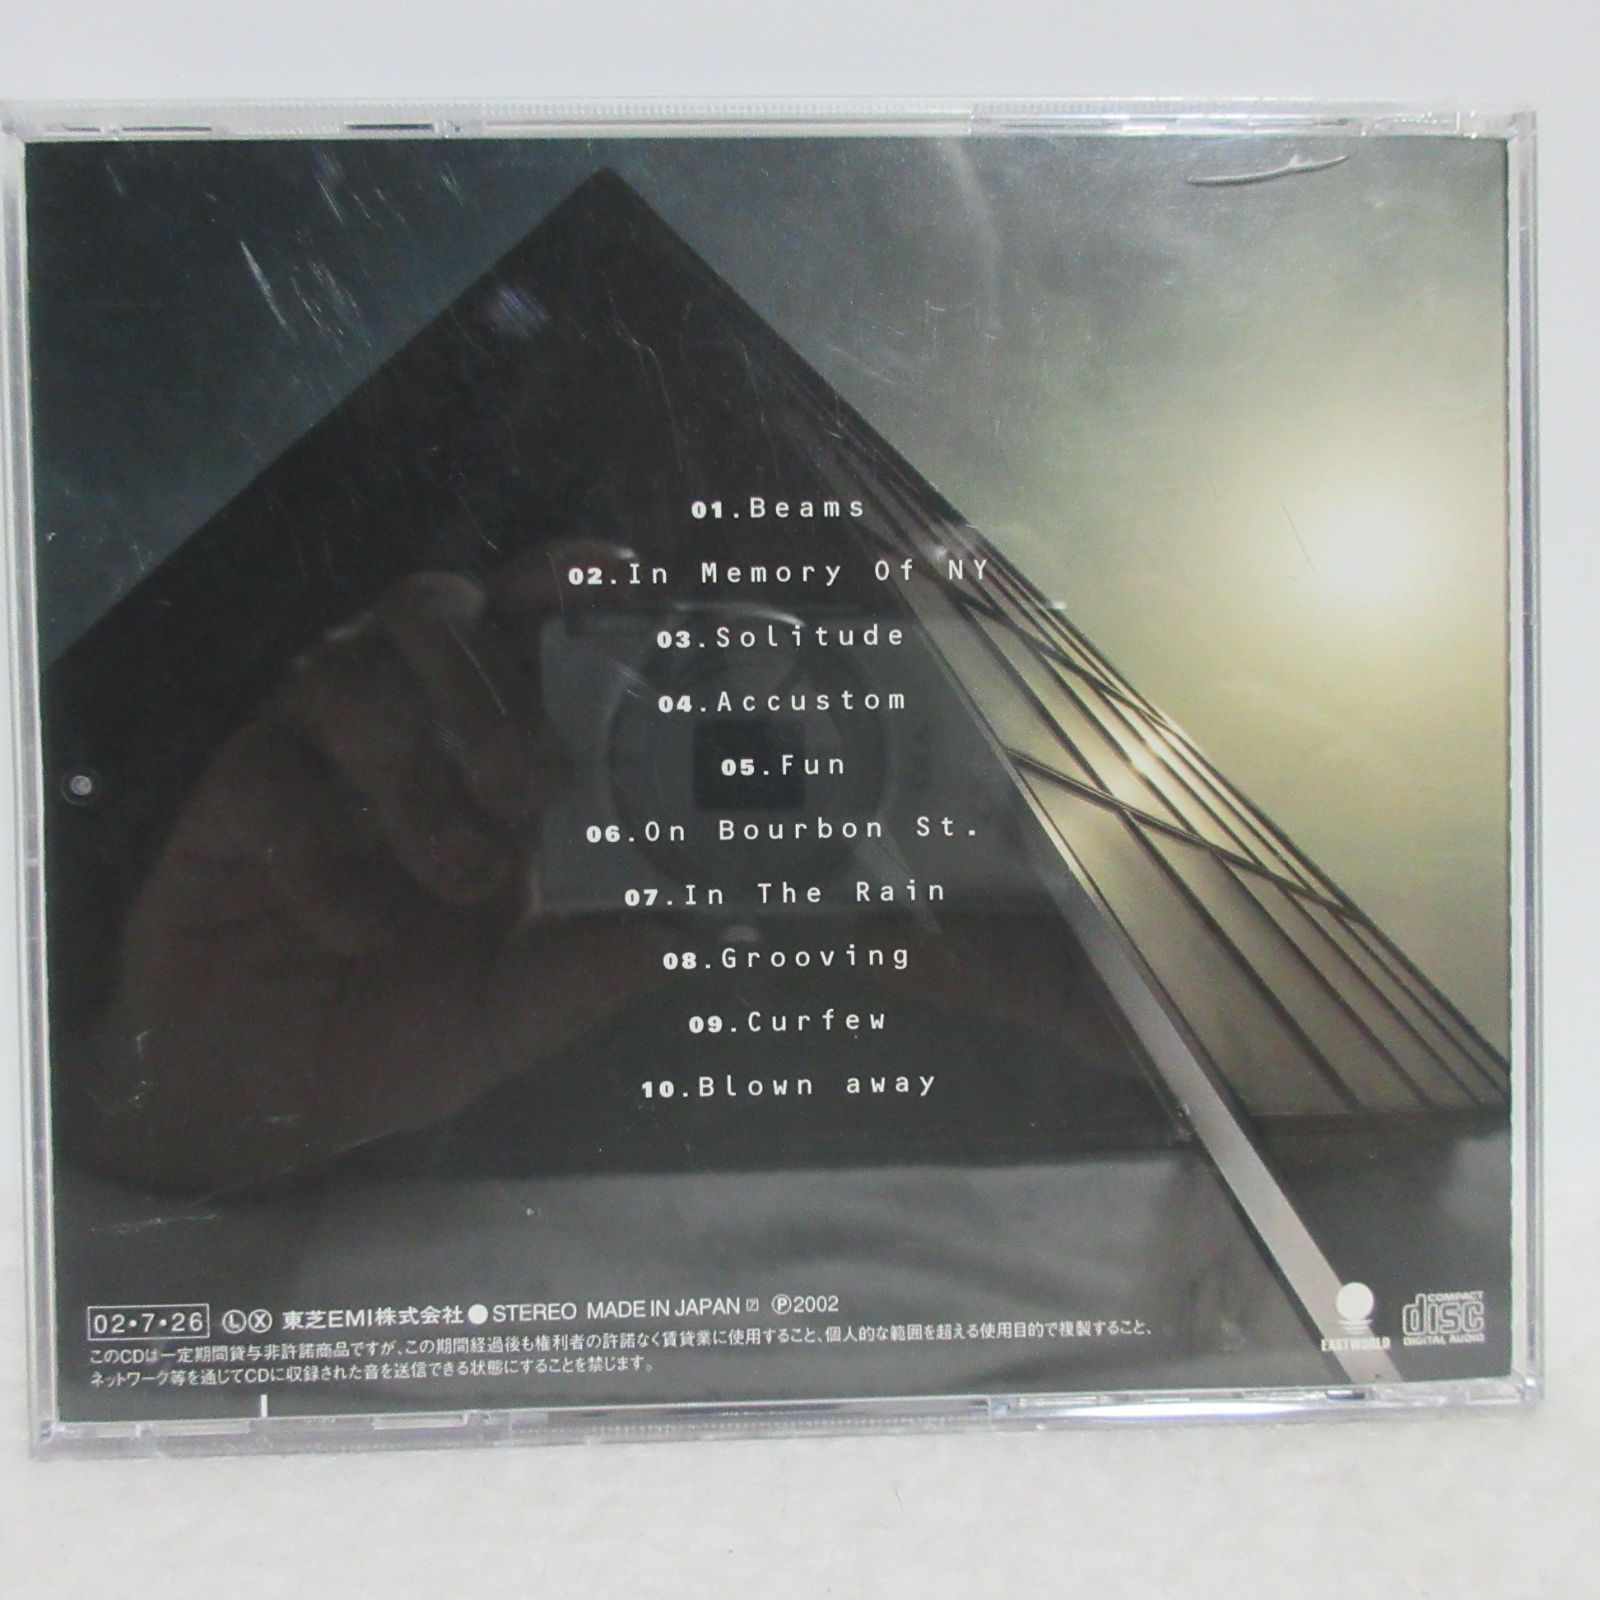 【CD】上妻宏光/BEAMS~AGATSUMAII